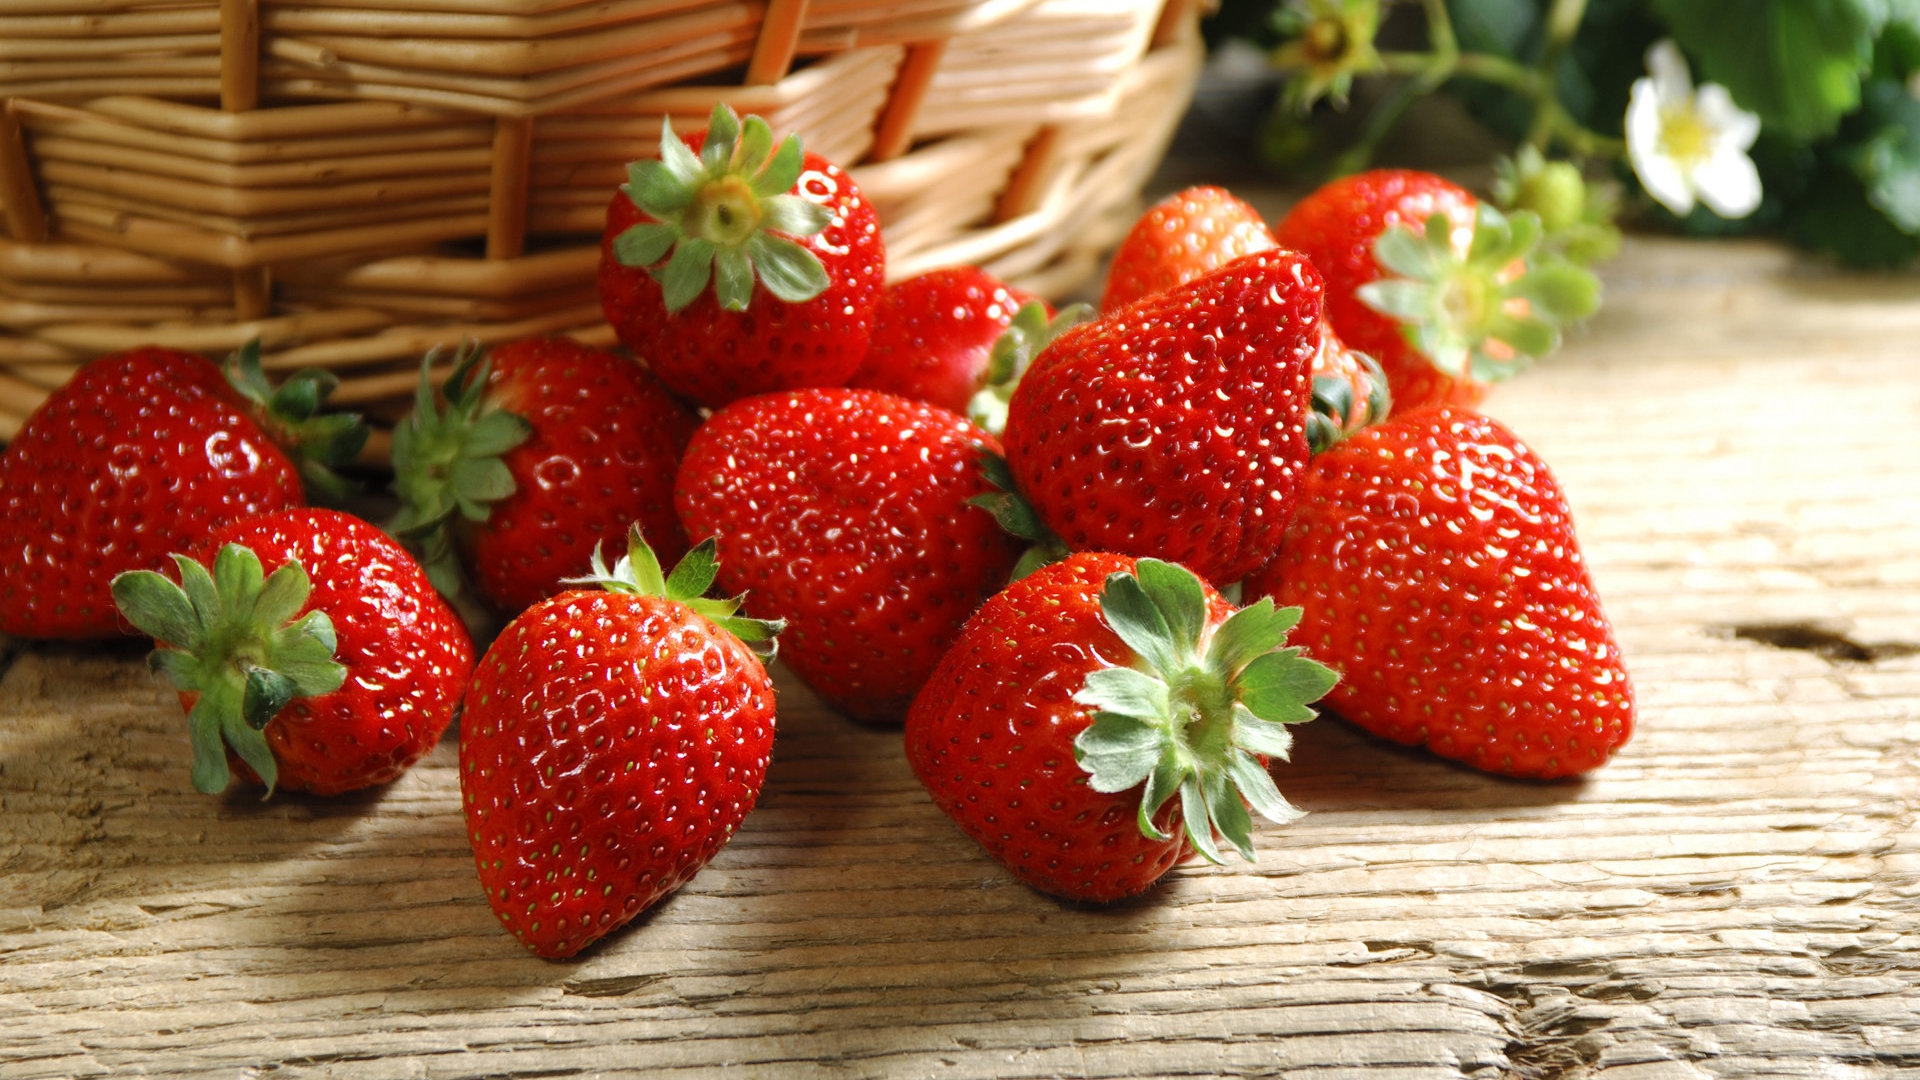 Ripe strawberries for 1920 x 1080 HDTV 1080p resolution